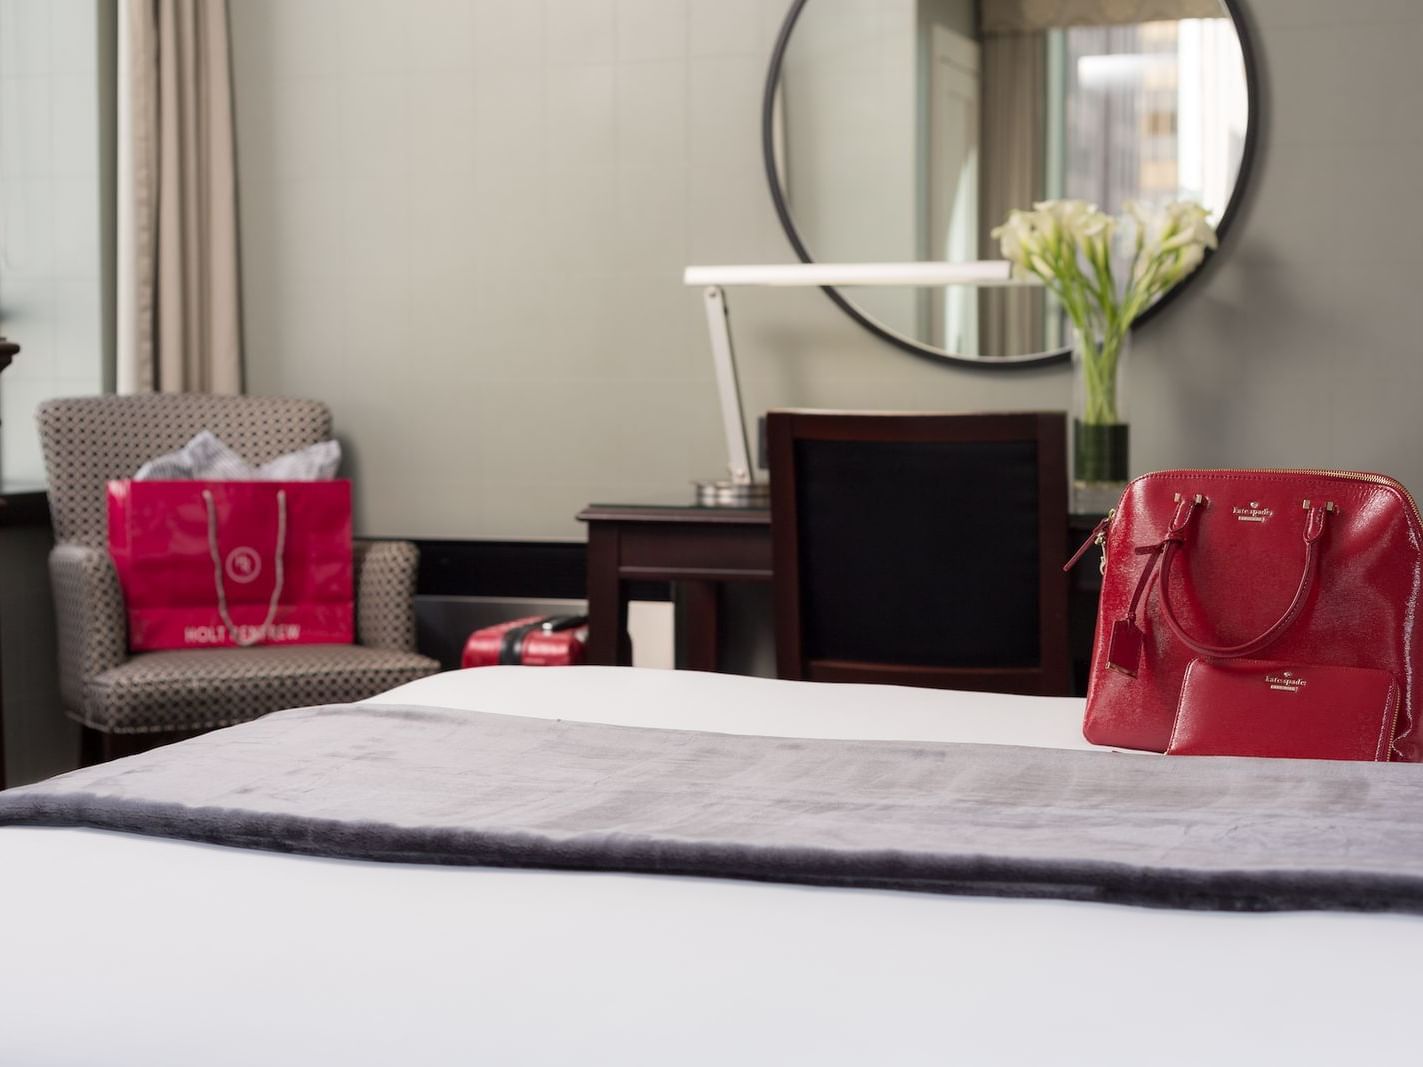 red bag on queen bed facing circular mirror